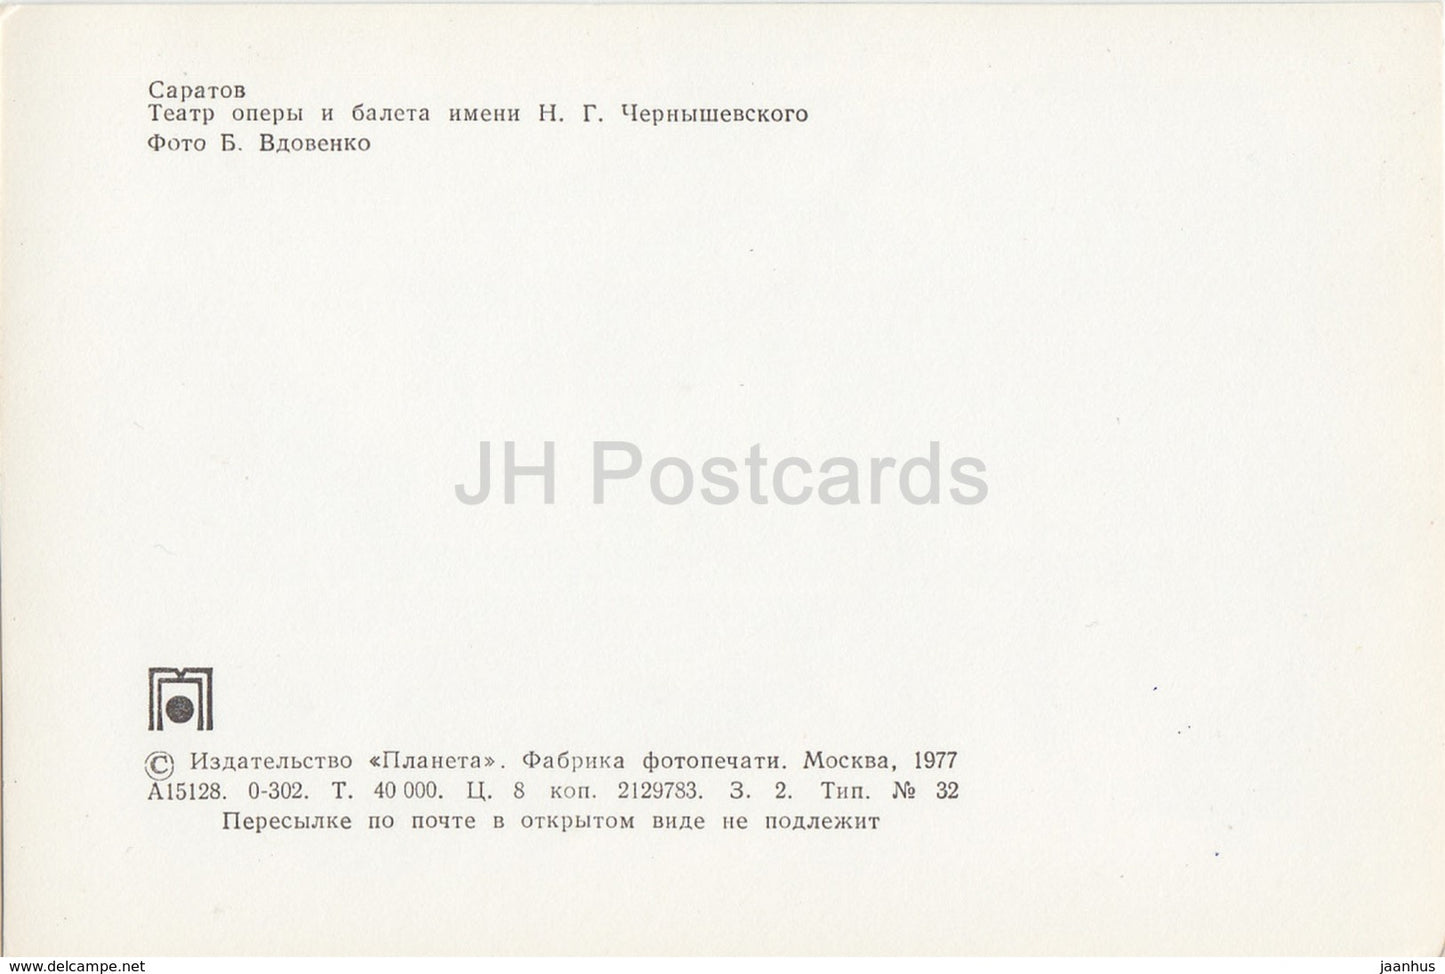 Saratov - Chernyshevsky Opera and Ballet Theatre - 1977 - Russia USSR - unused - JH Postcards